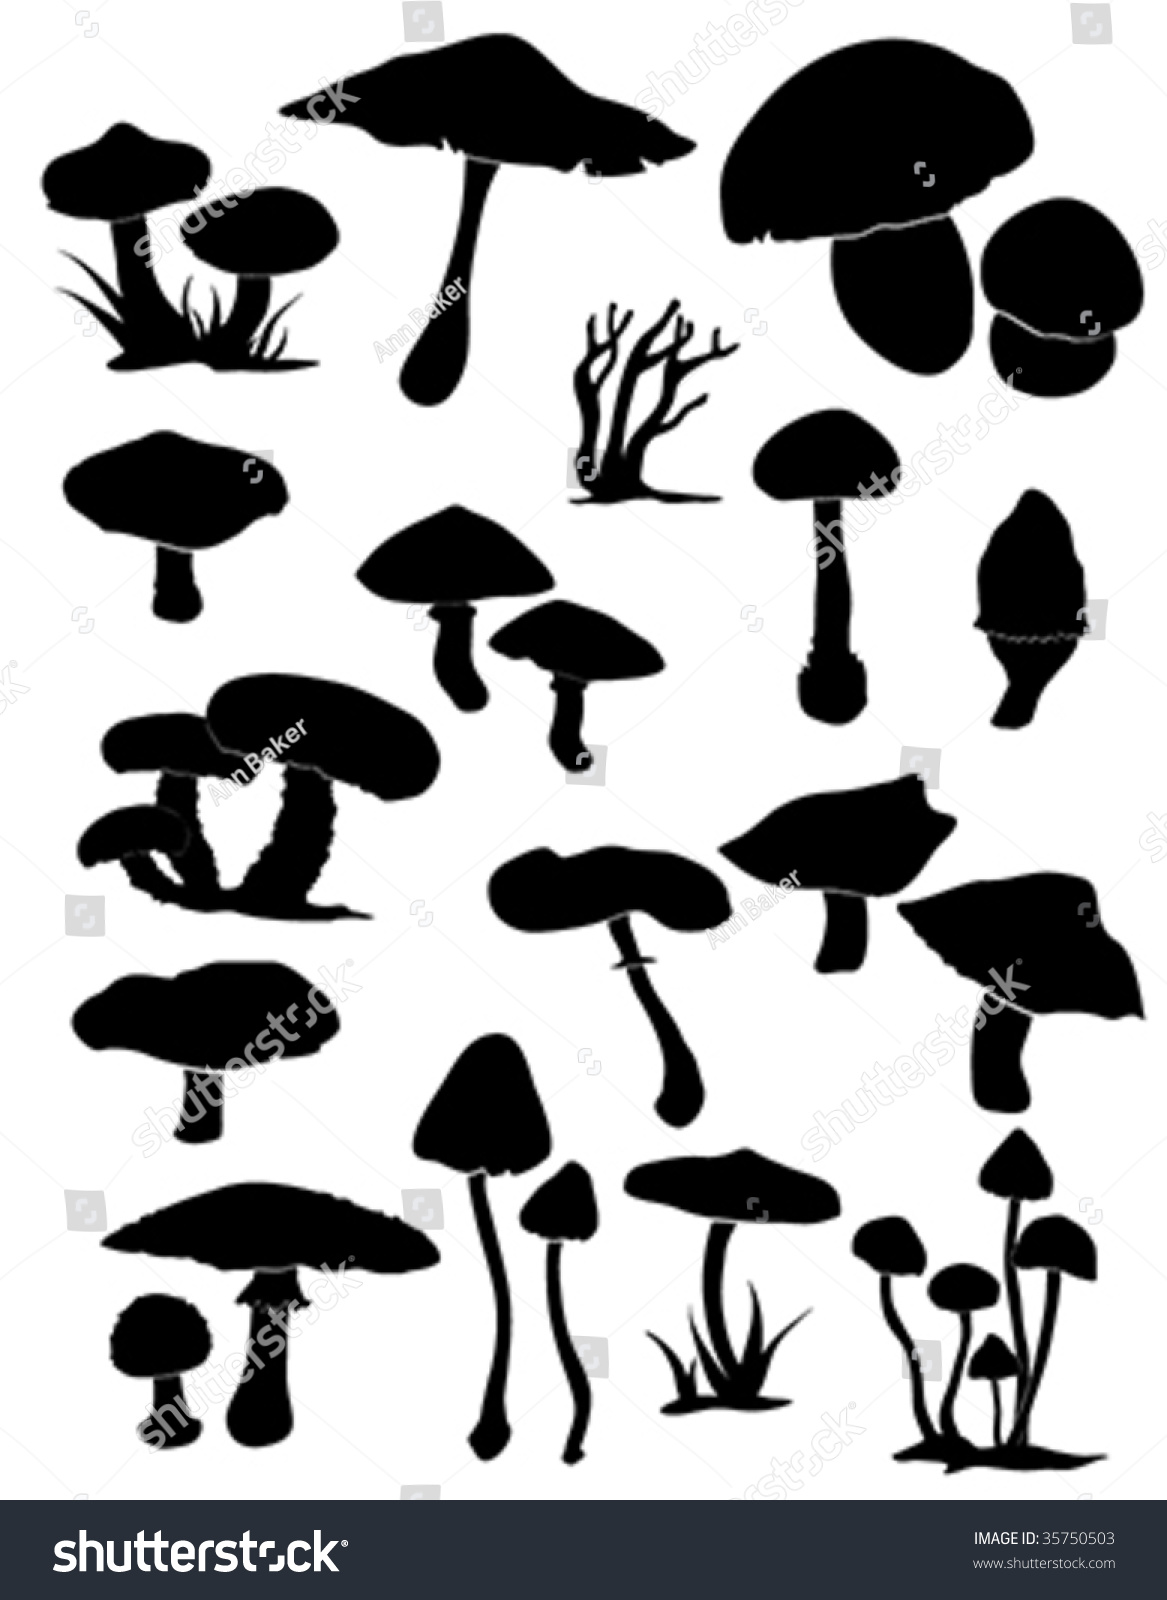 mushroom silhouette clip art - photo #27